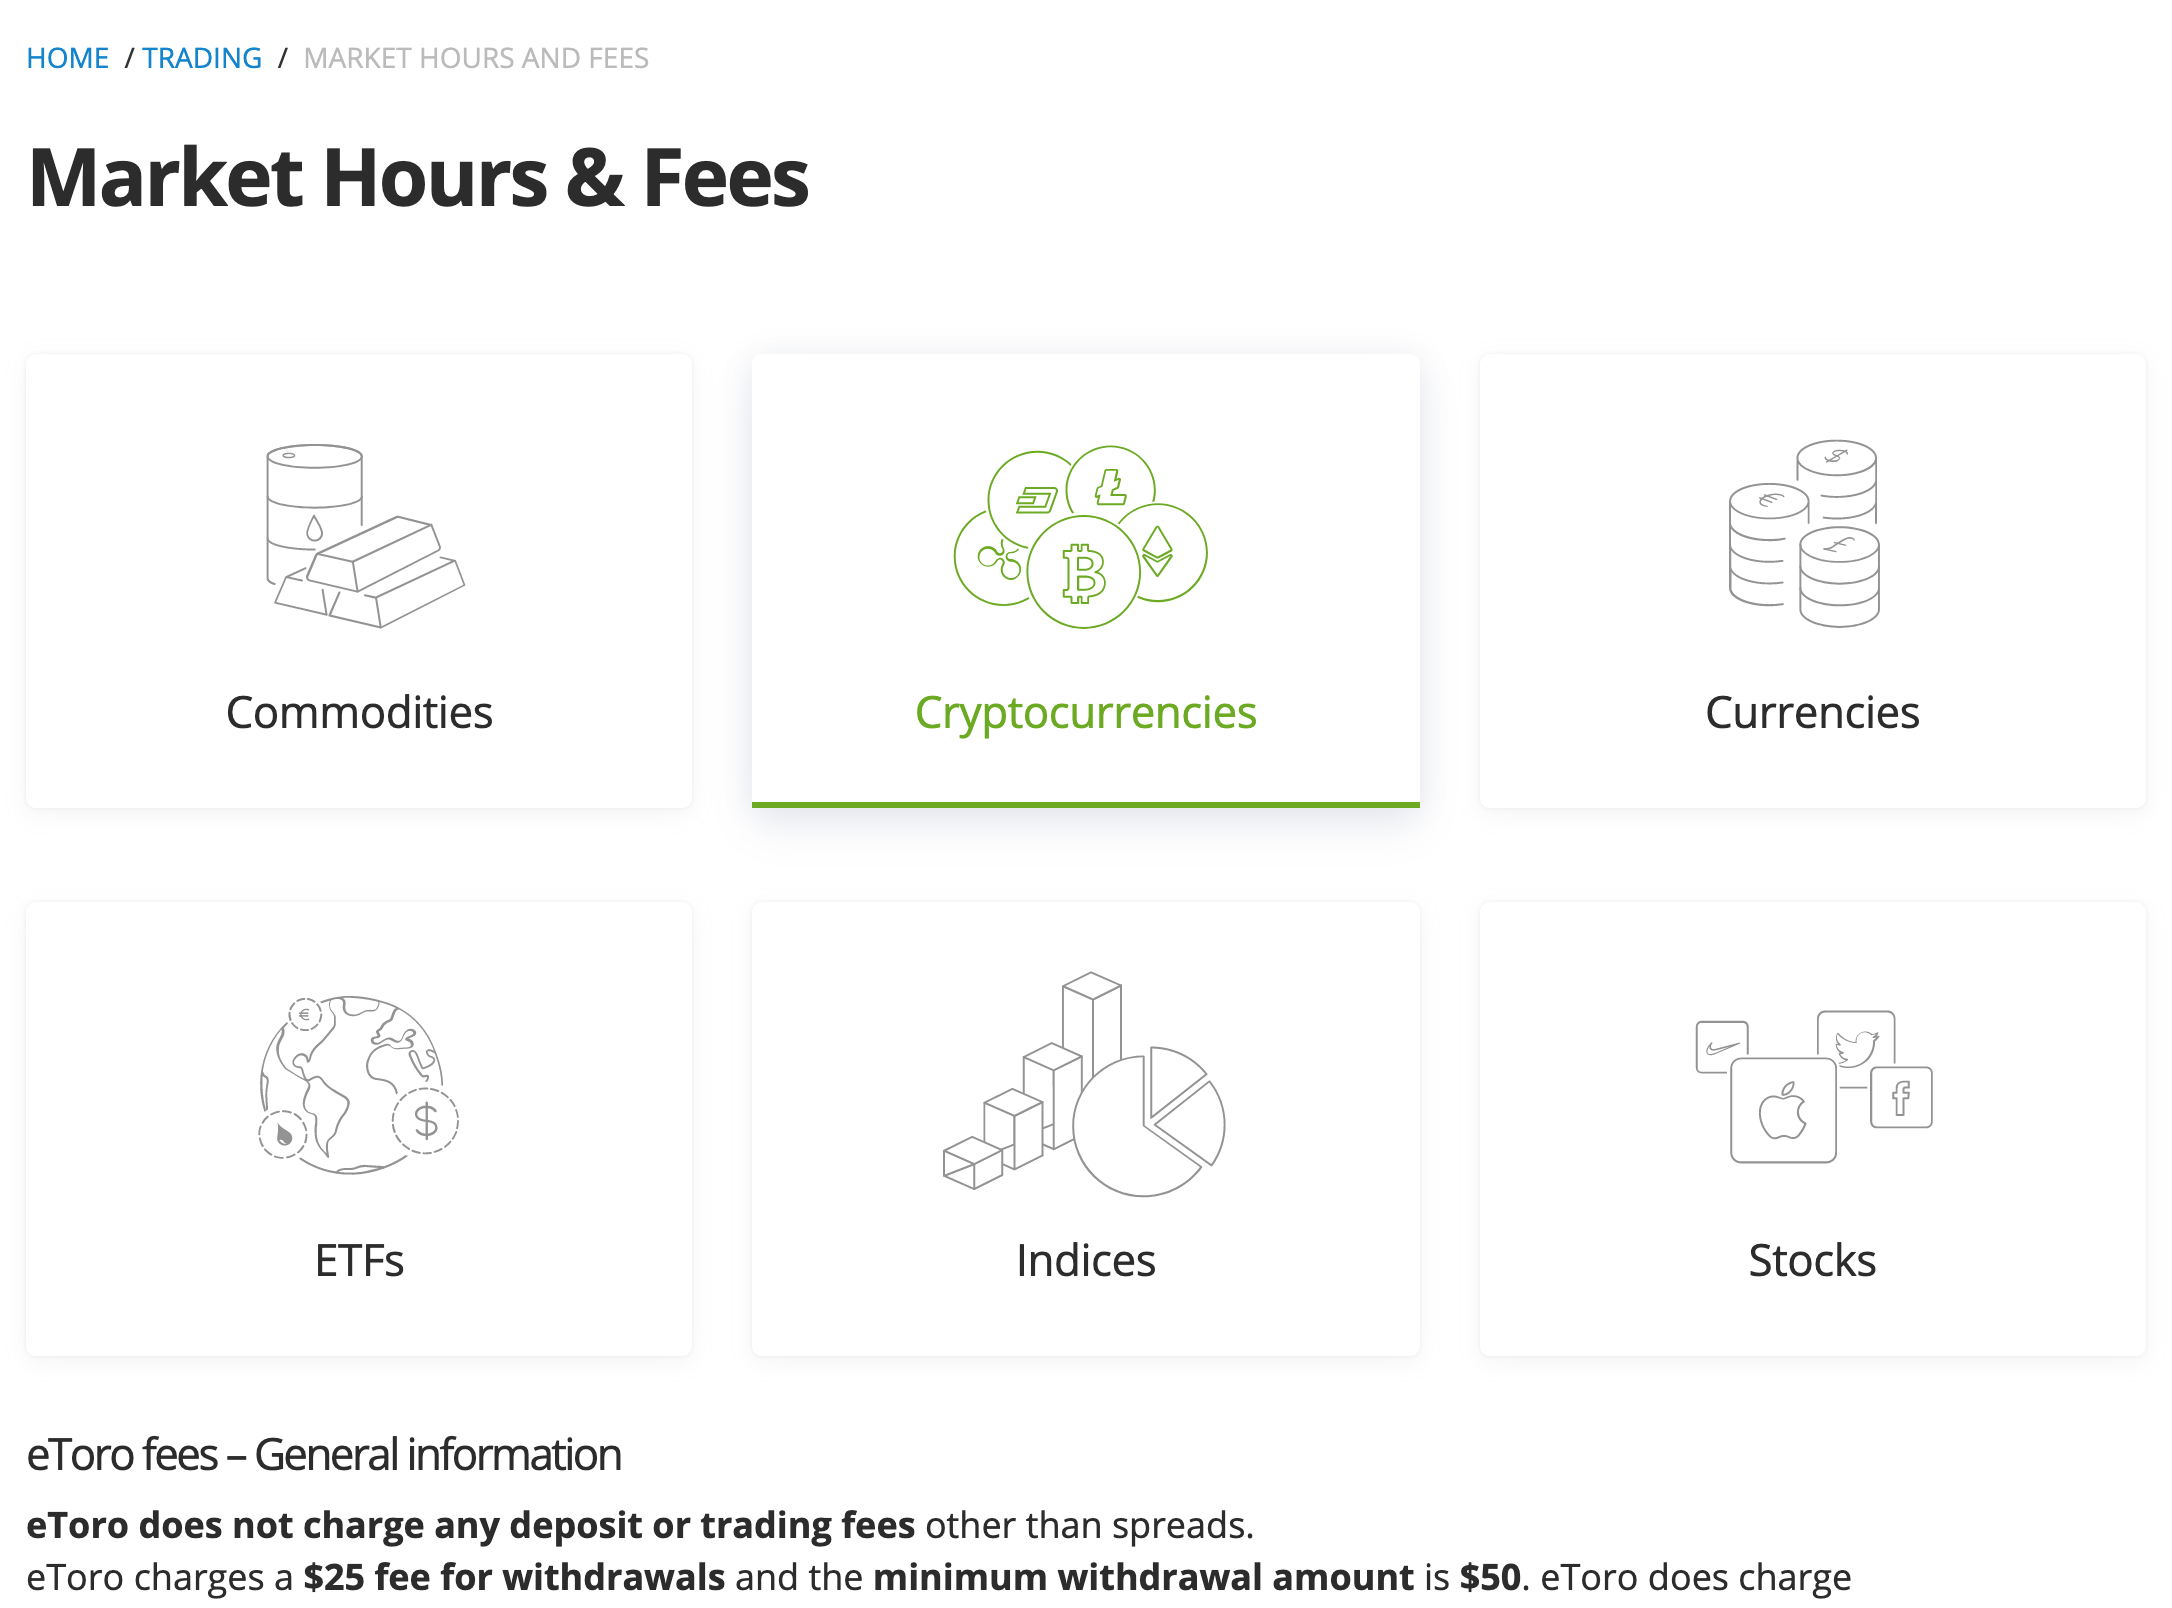 the fees page on eToro